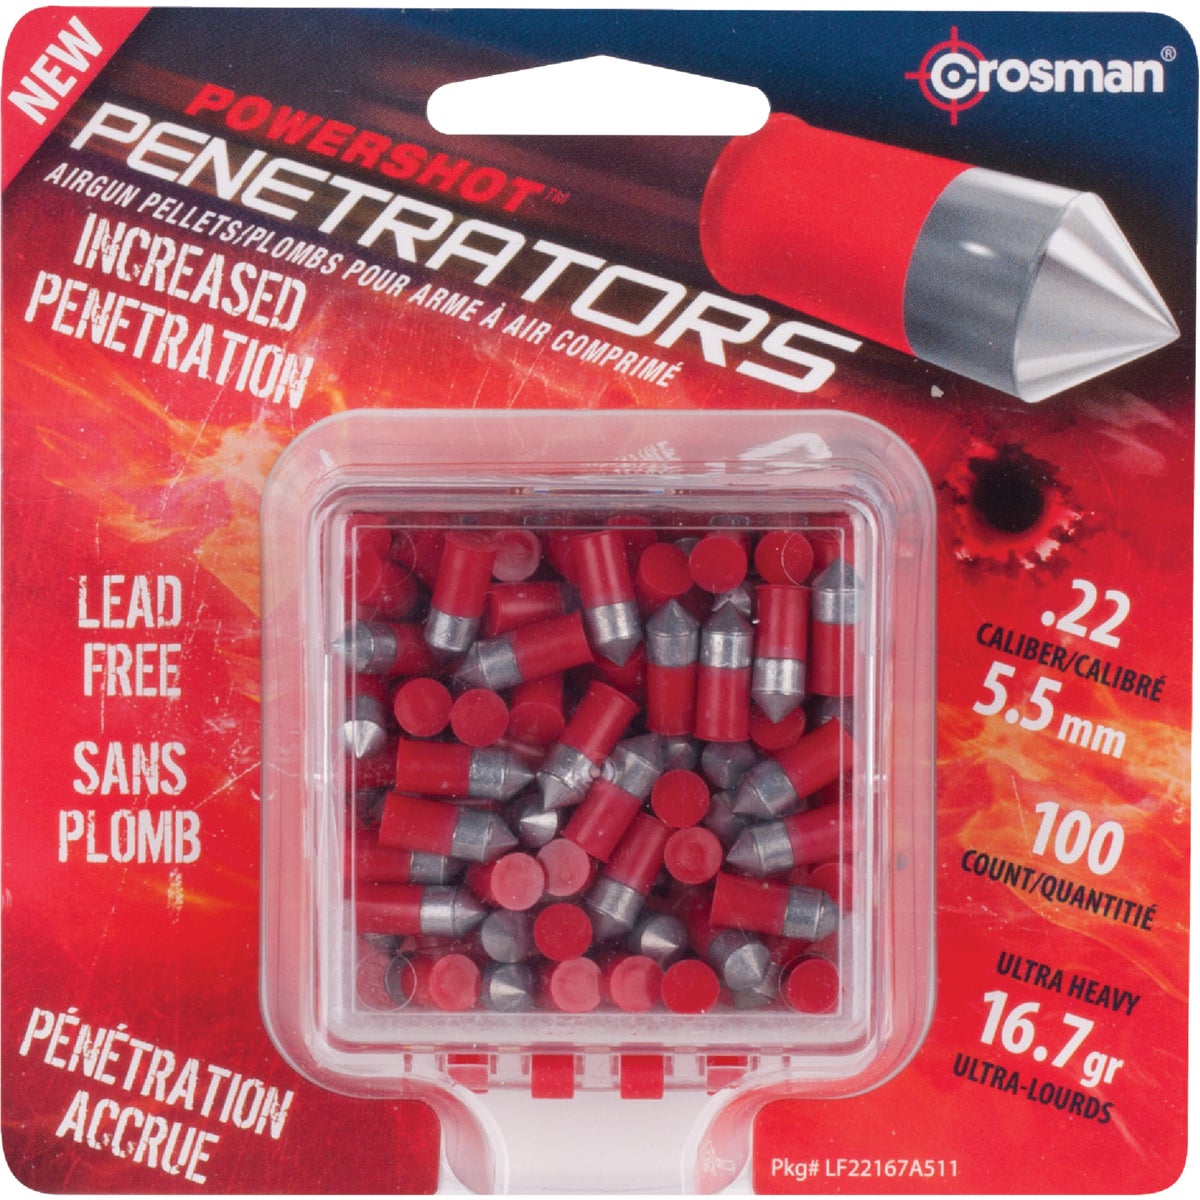 Crosman PowerShot Penetrators .22 Cal. Pointed 16.7 Grain Pellet Ammunition (100-Pack)